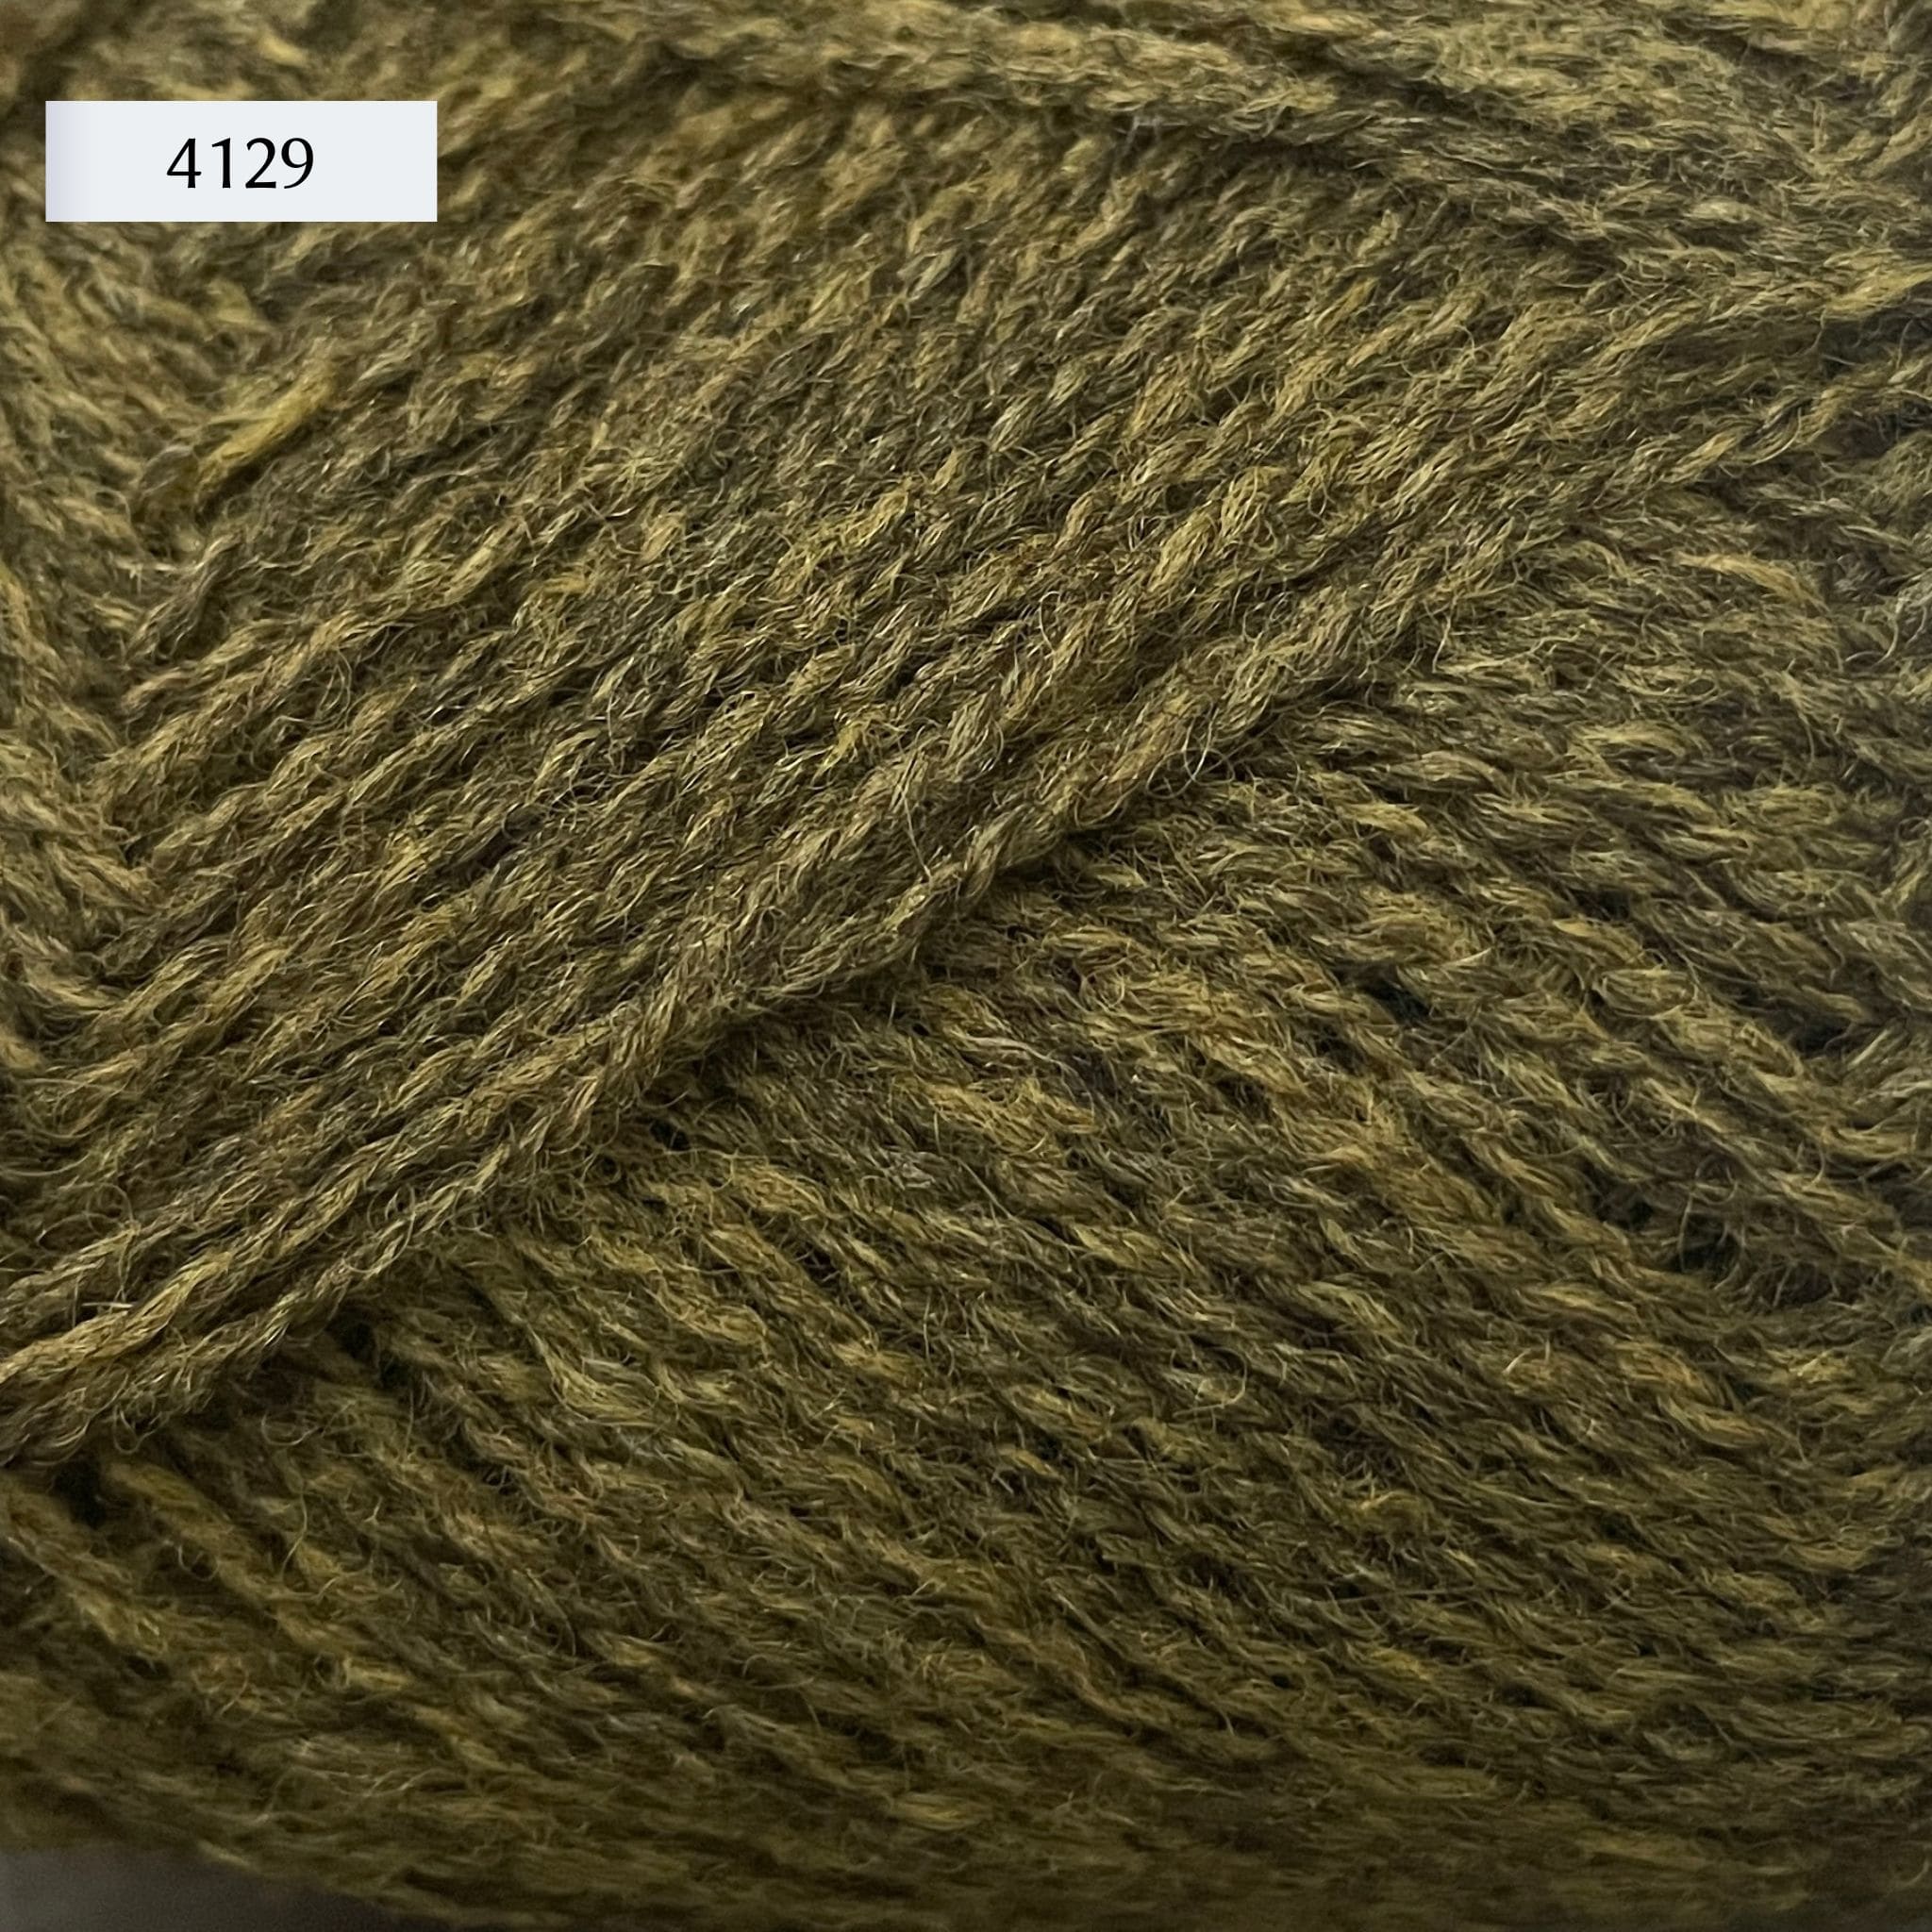 Rauma Finullgarn, a fingering/sport weight yarn, in color 4129, a heathered olive green